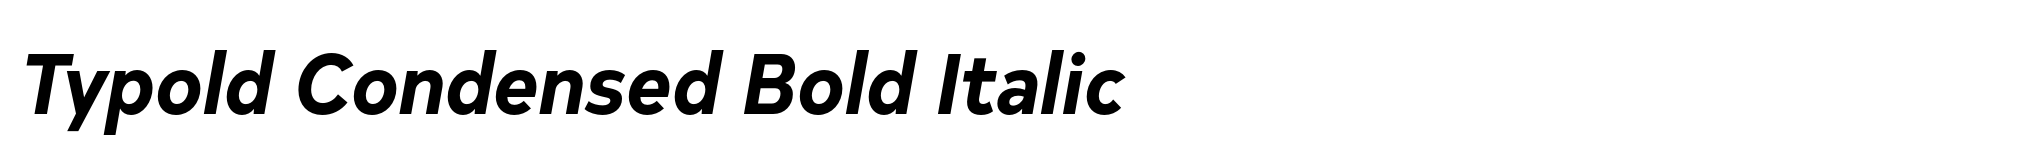 Typold Condensed Bold Italic image